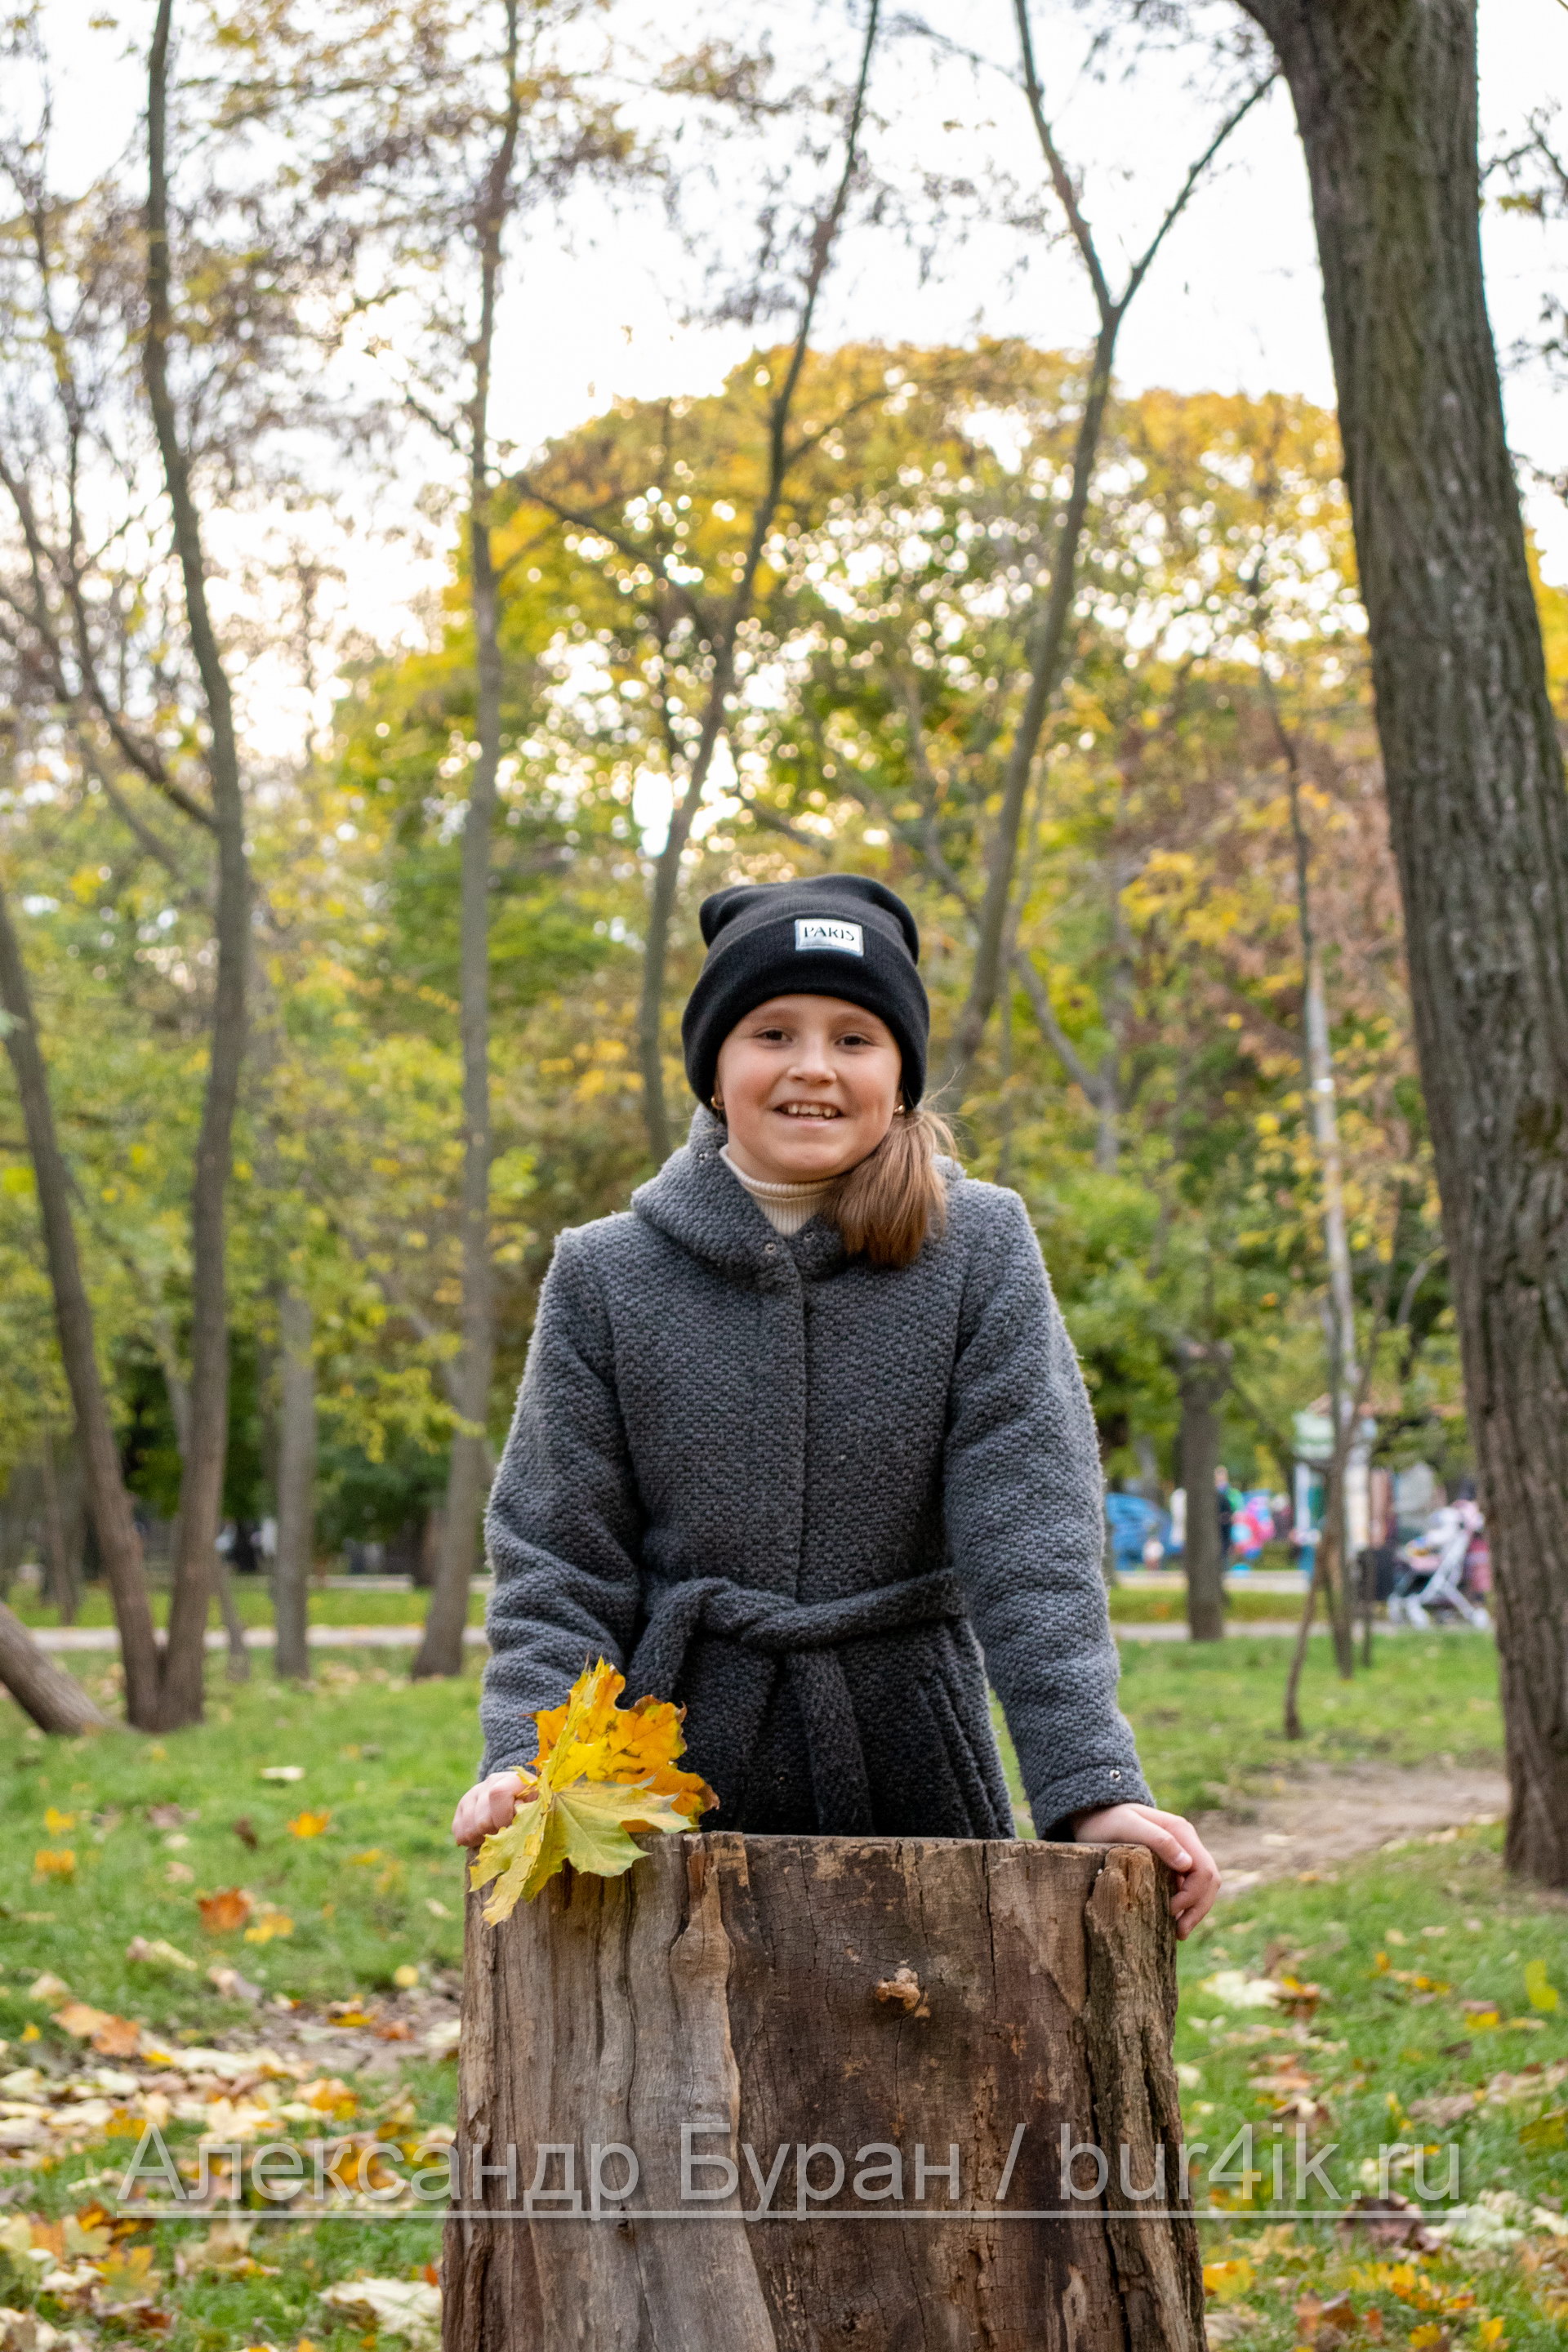 Девушка оперлась на пене в осенний парк - Украина, Одесса, 17,10,2019